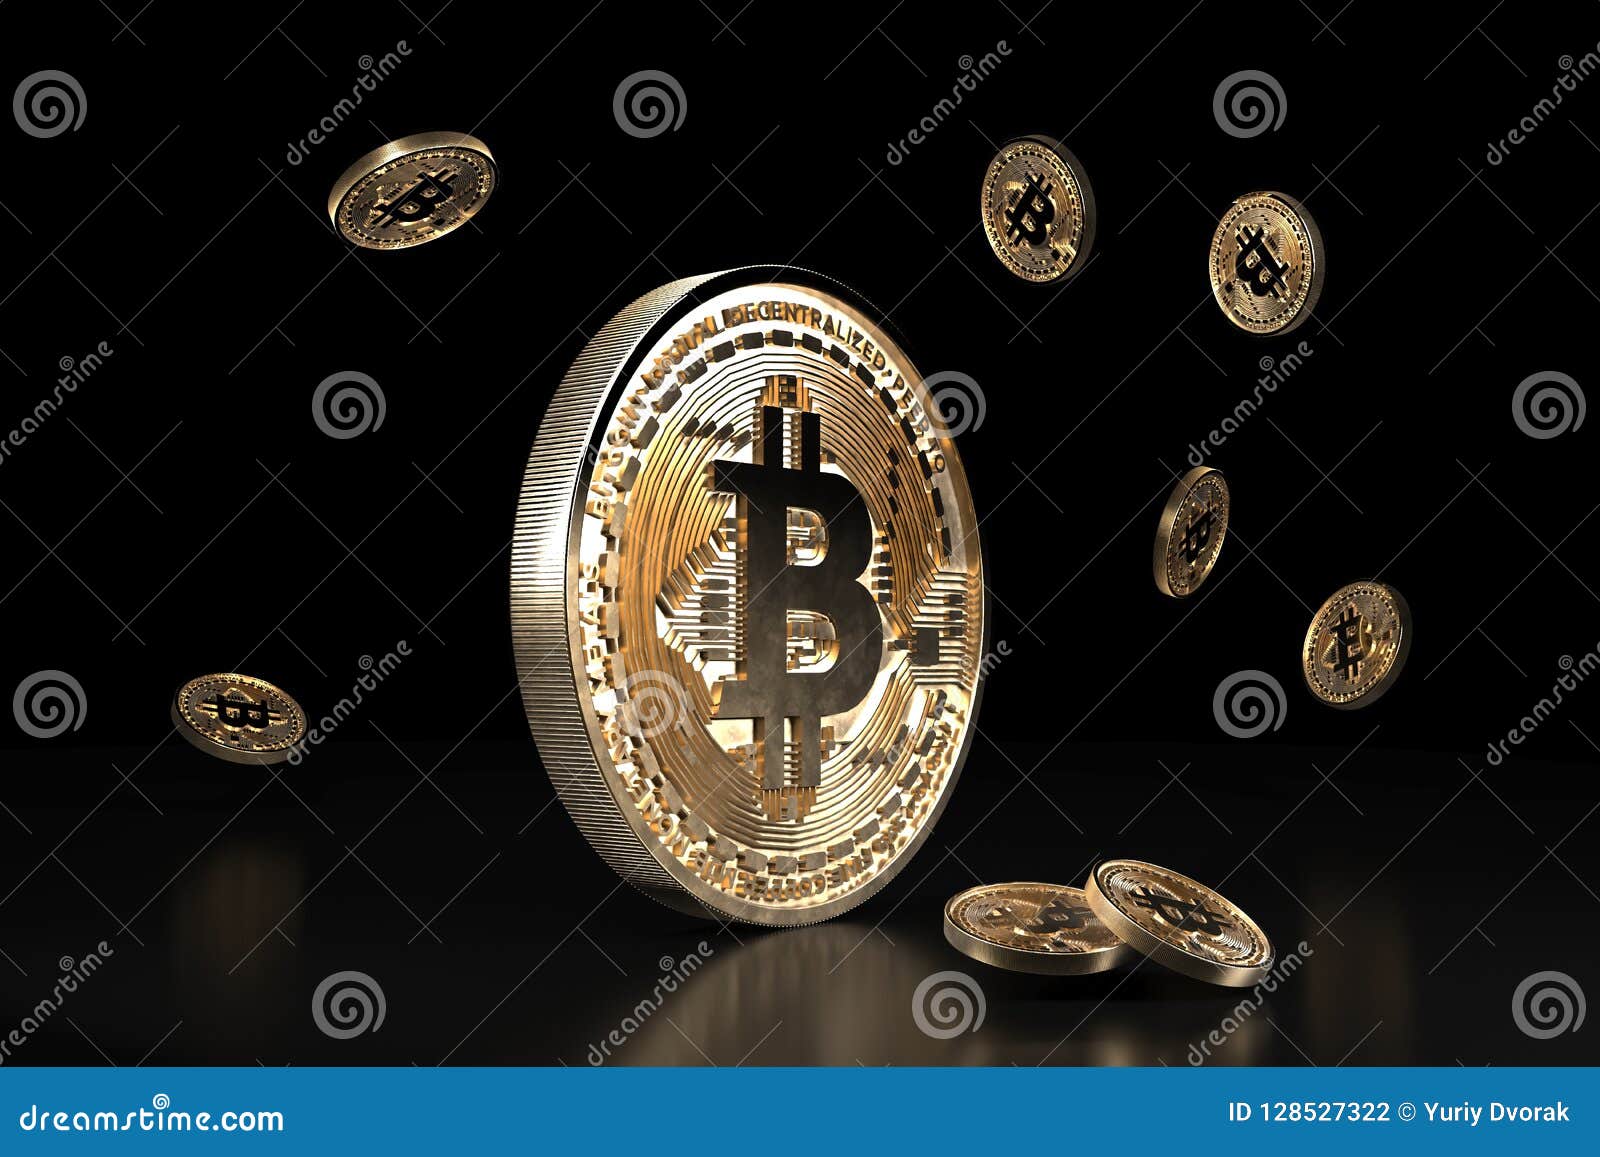 Buy Bitcoin For Dark Web